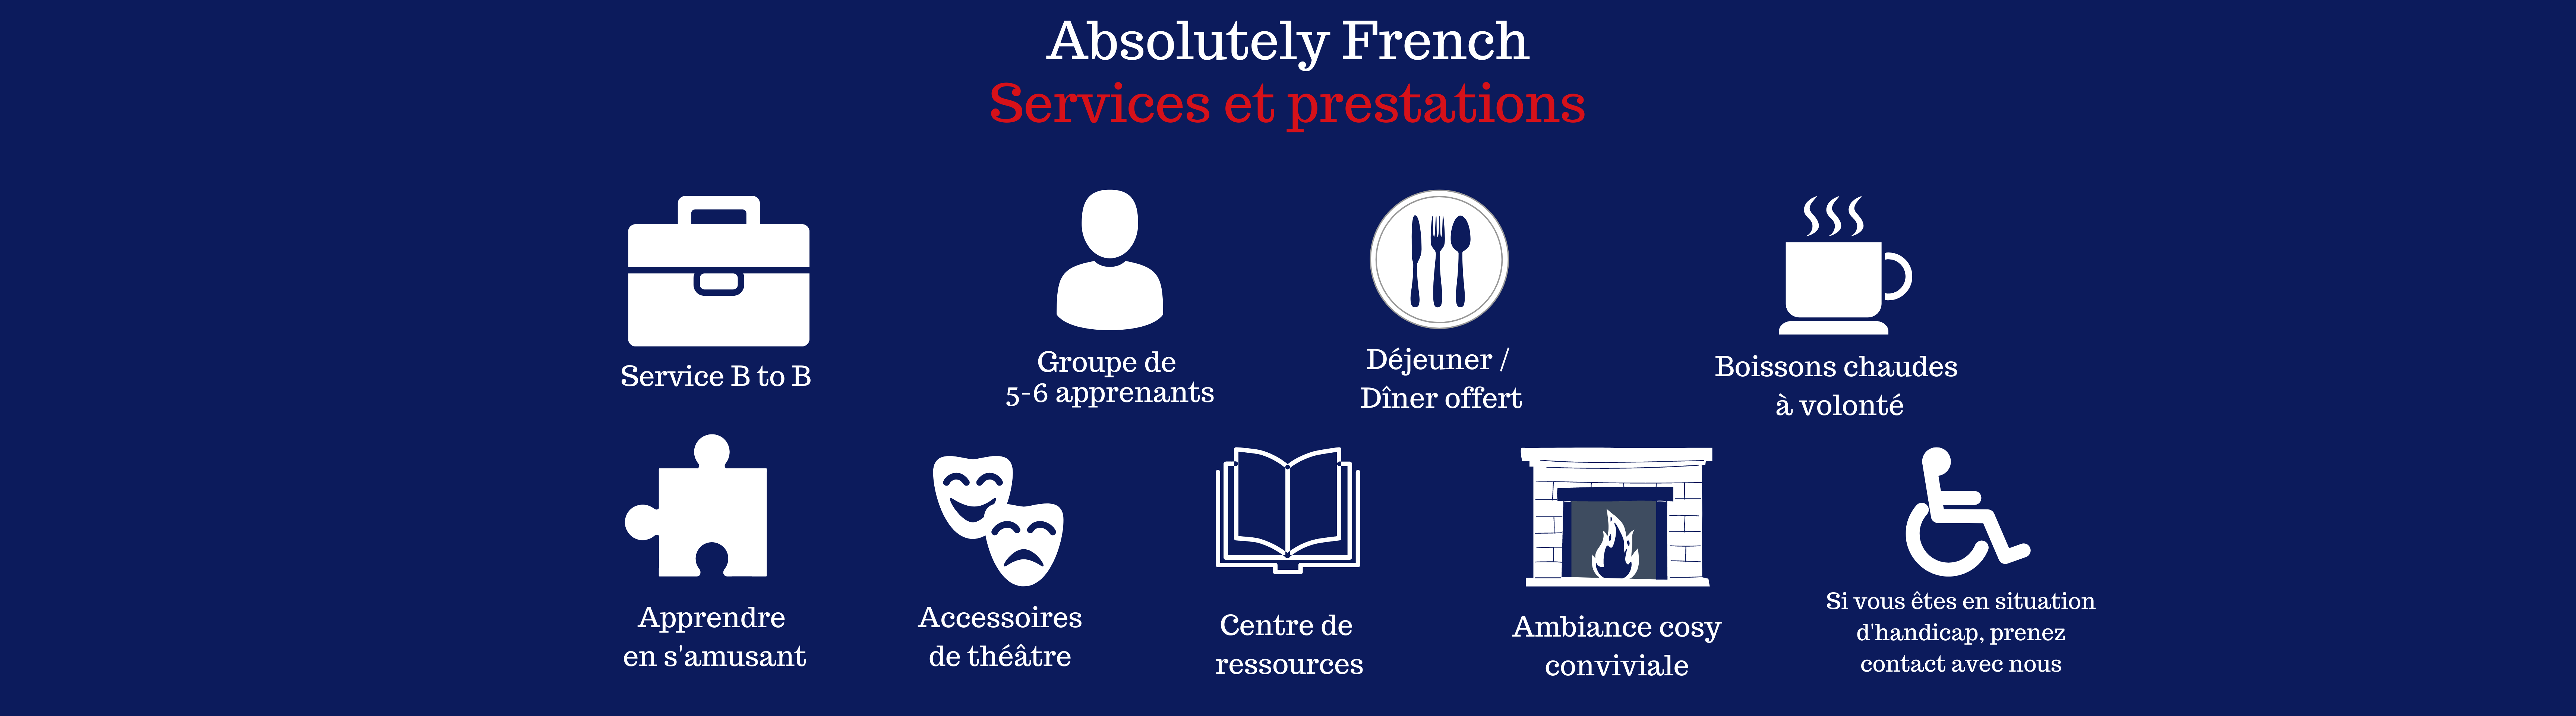 Bannière Services et Prestations - Absolutely French